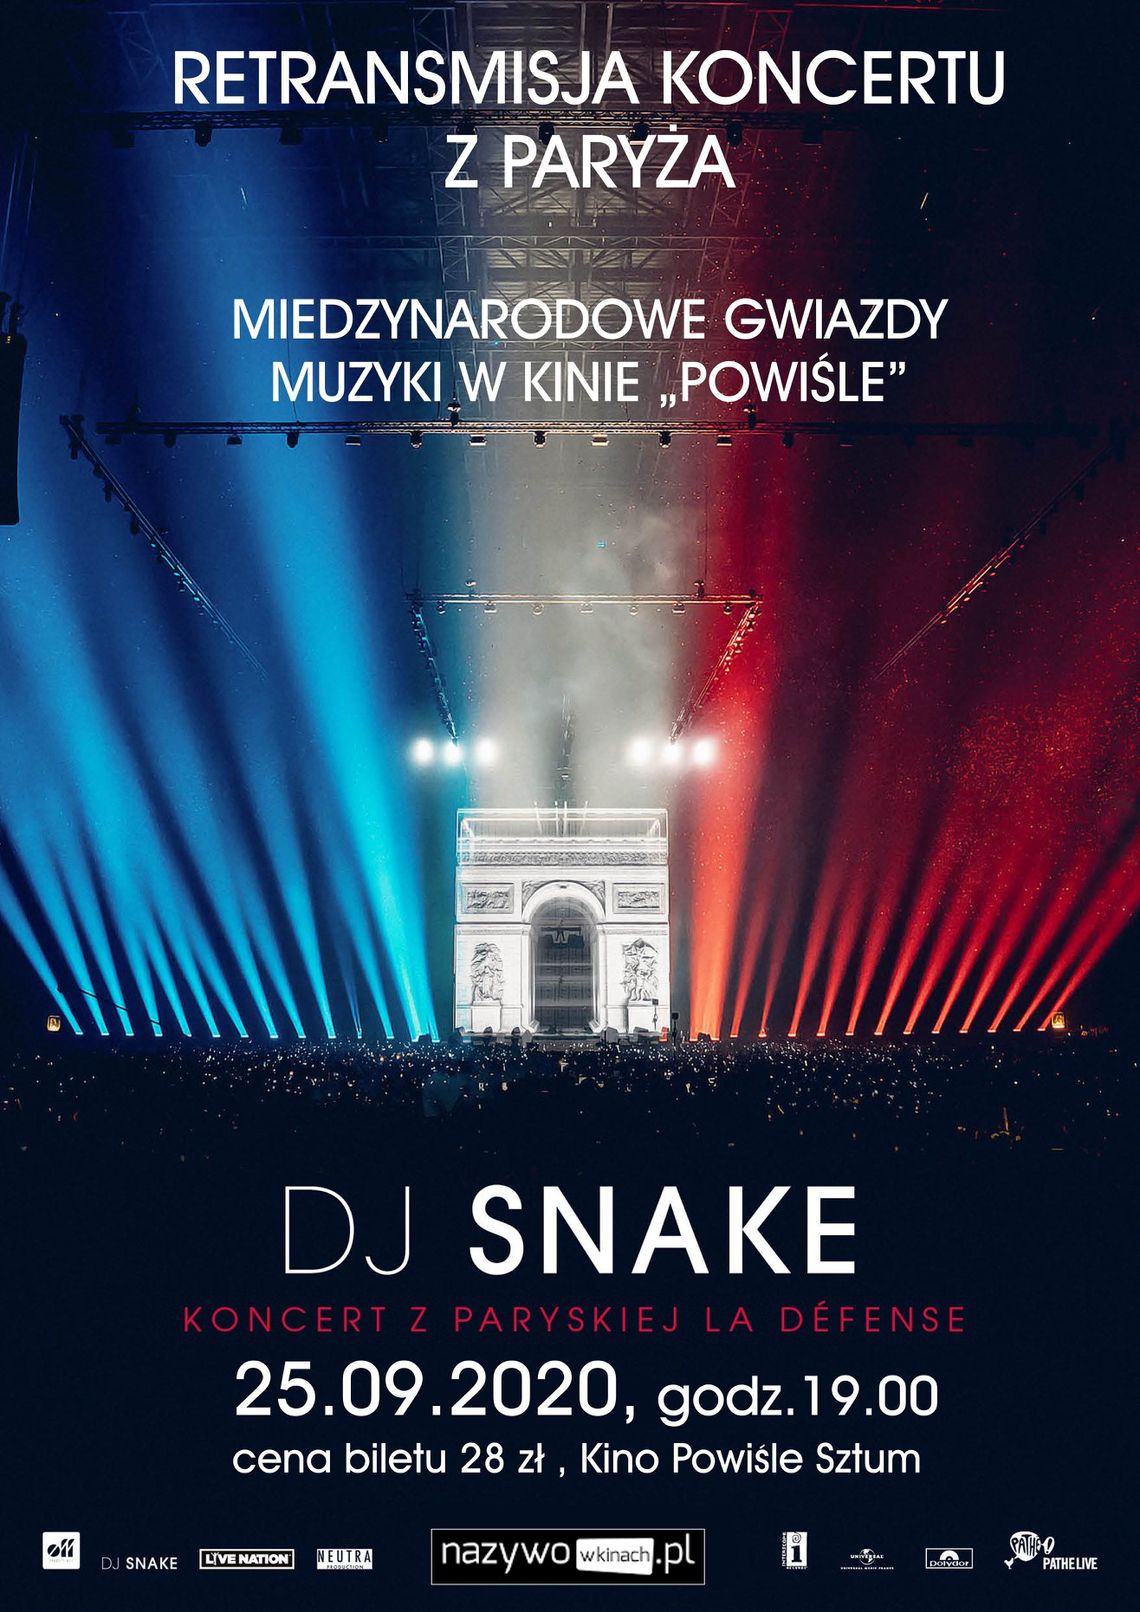 Retransmisja koncertu DJ-a Snake’a z Paryża. Kino Powiśle Sztum zaprasza.